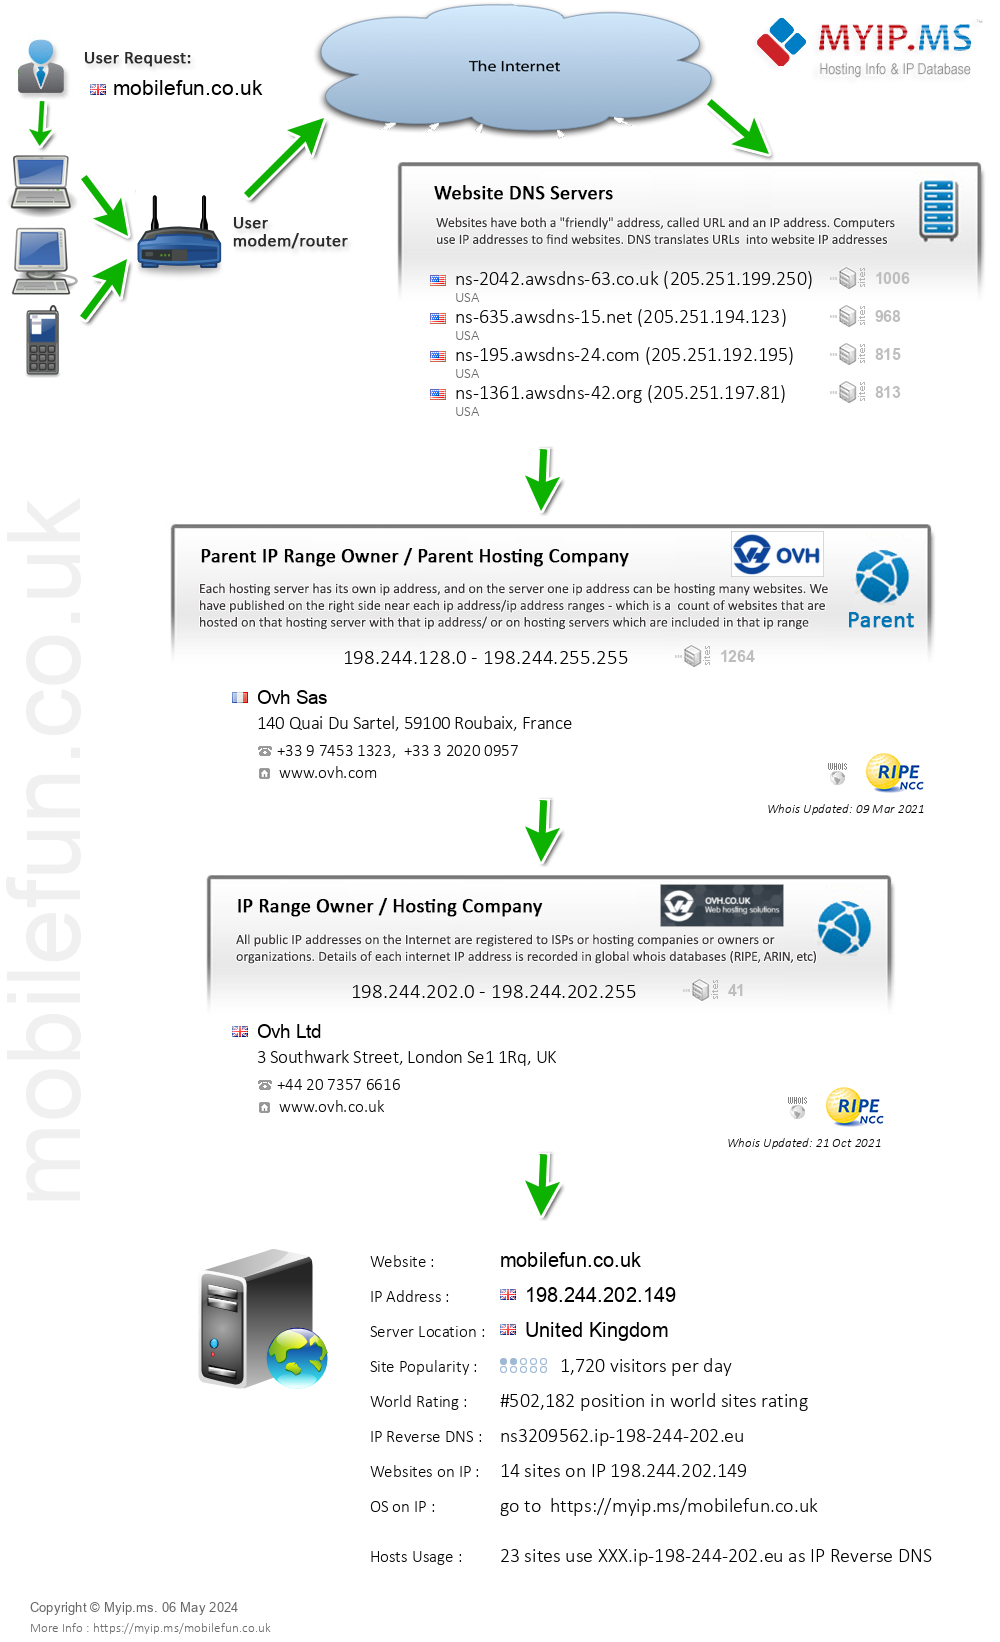 Mobilefun.co.uk - Website Hosting Visual IP Diagram